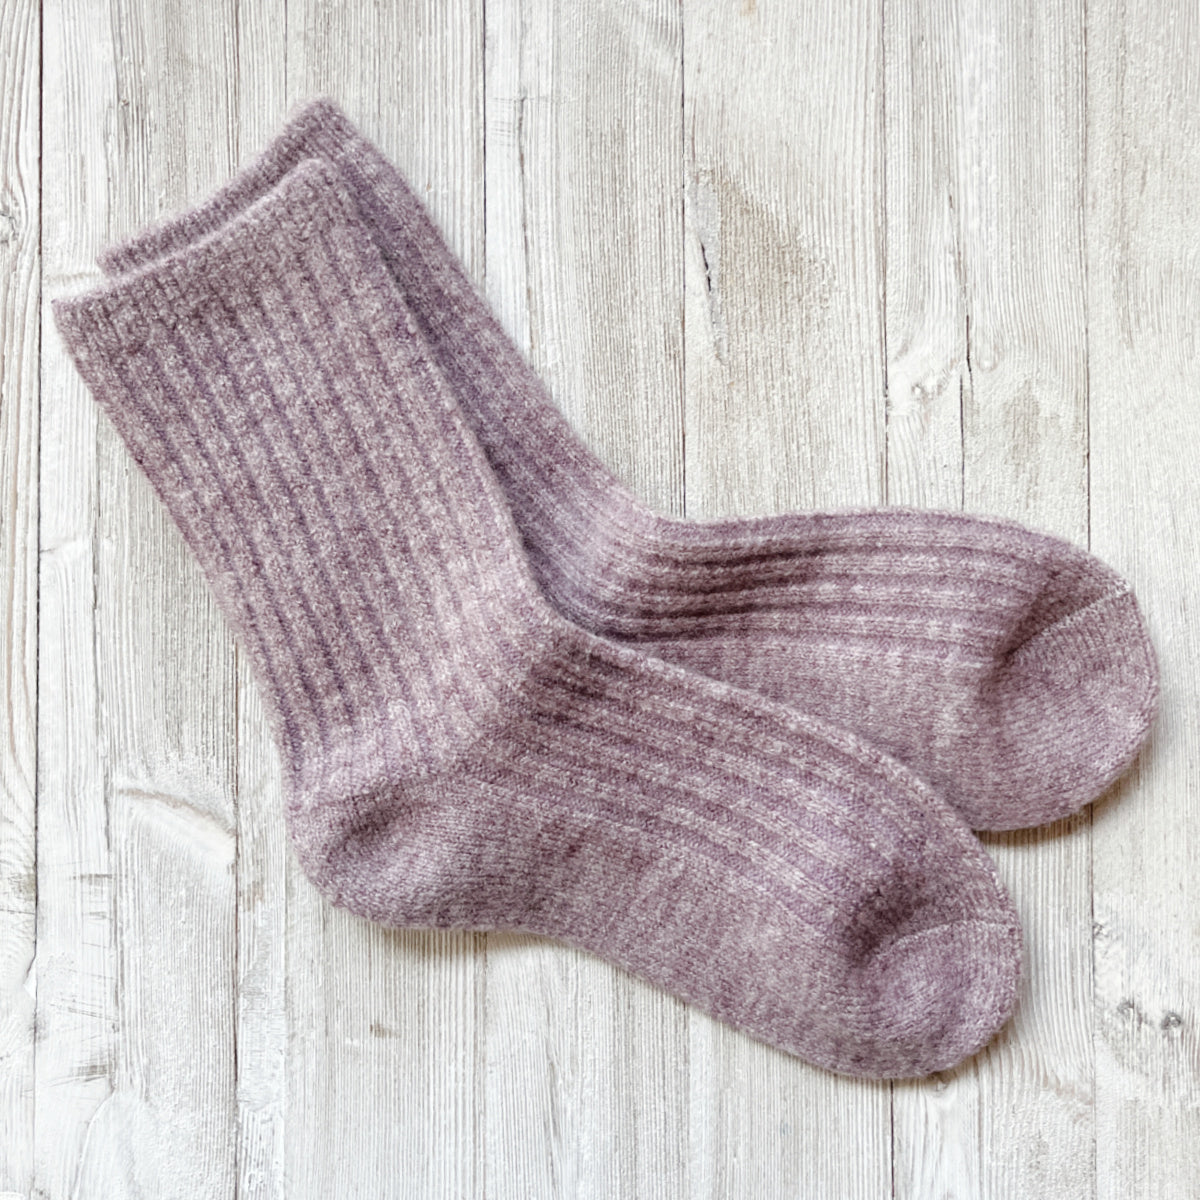 Cashmere wool socks